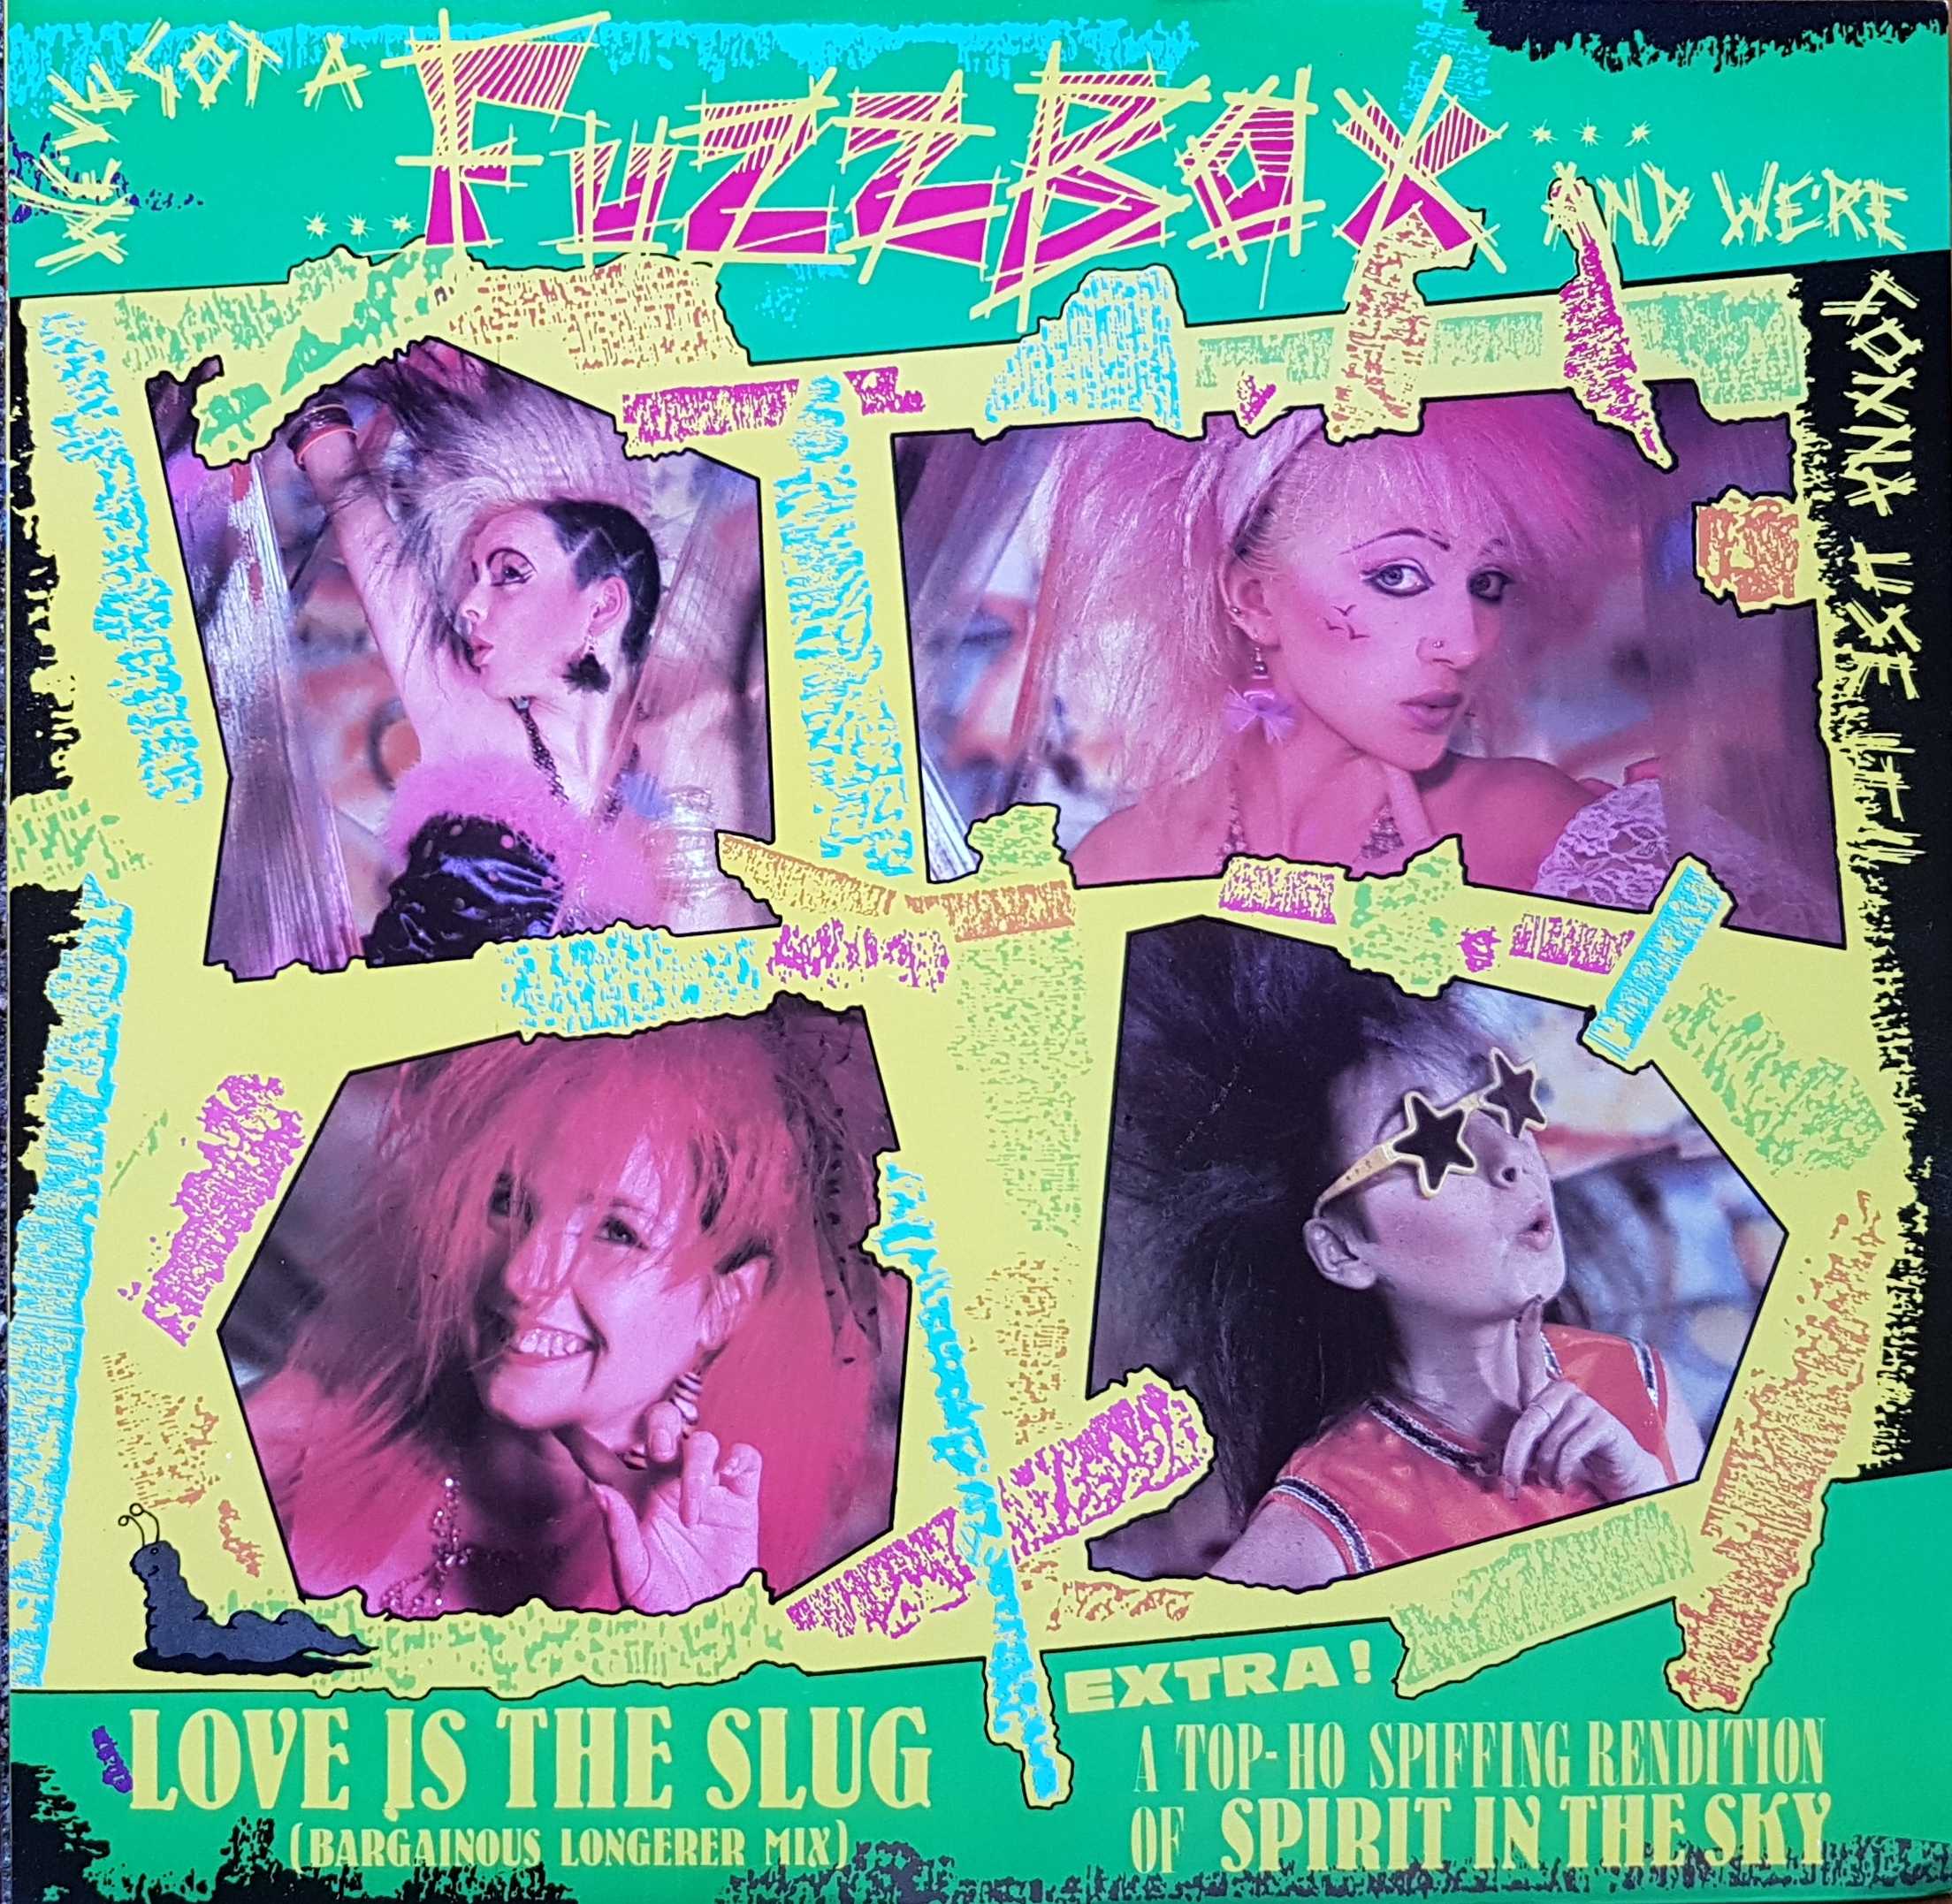 Picture of Love is a slug by artist Fuzzbox / Greenbaum 